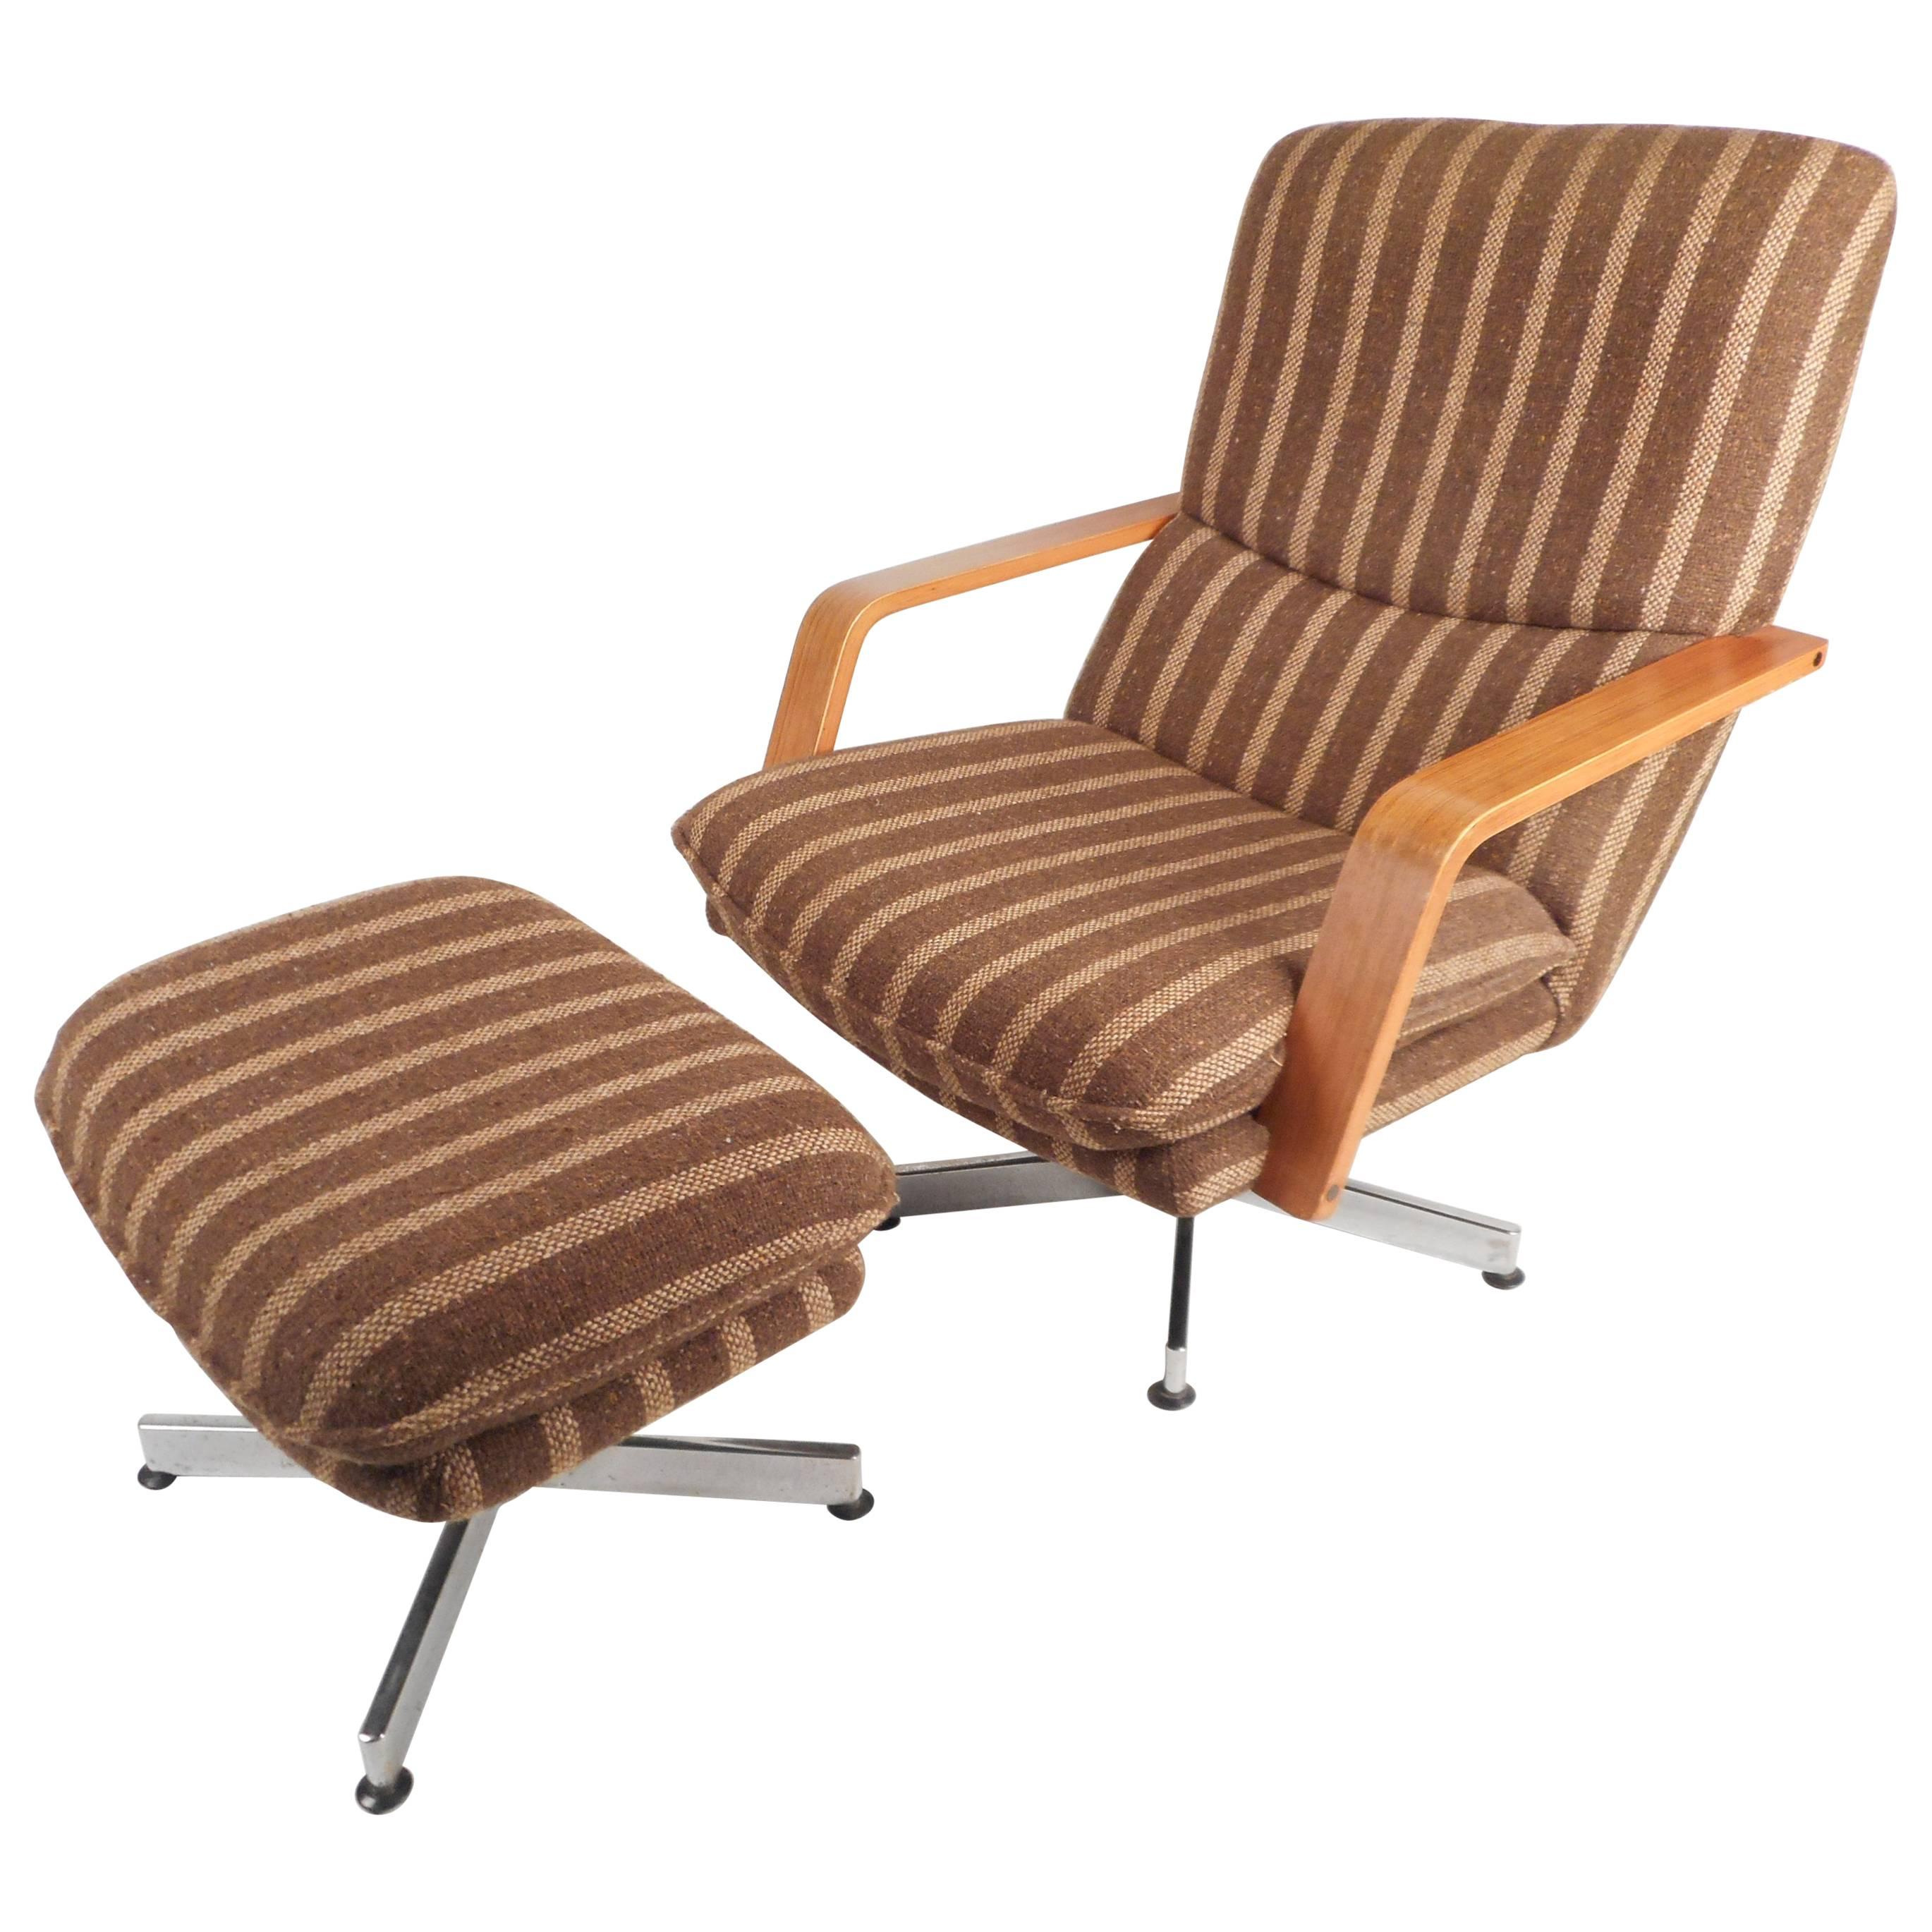 Mid-Century Modern Teak and Chrome Swivel Lounge Chair with Ottoman